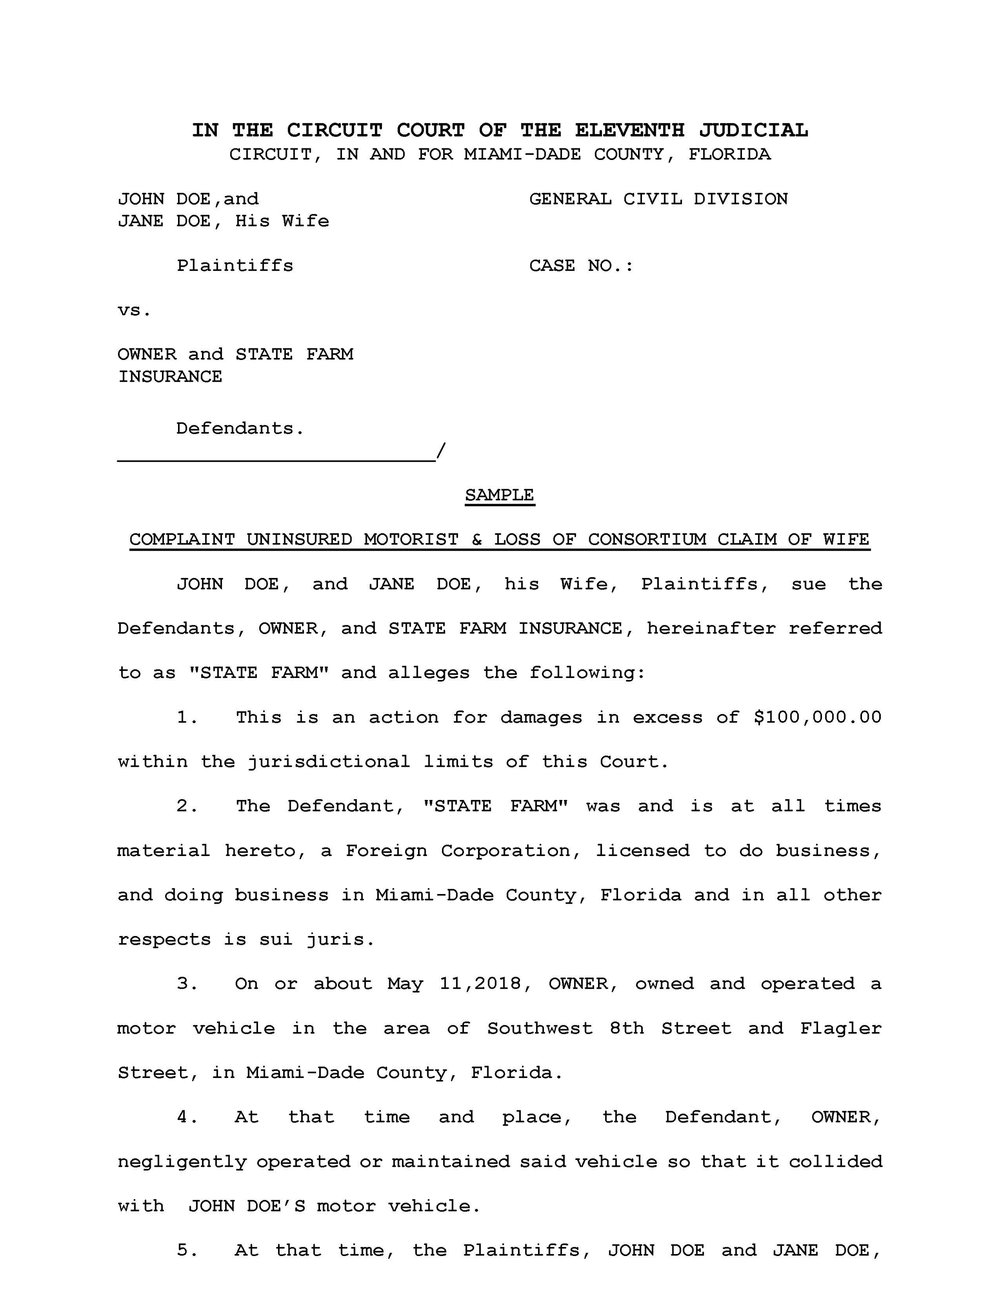 Kreutzer-Law-Attorney-Miami-Lawyers-Complain UM.ins_Page_1.jpg